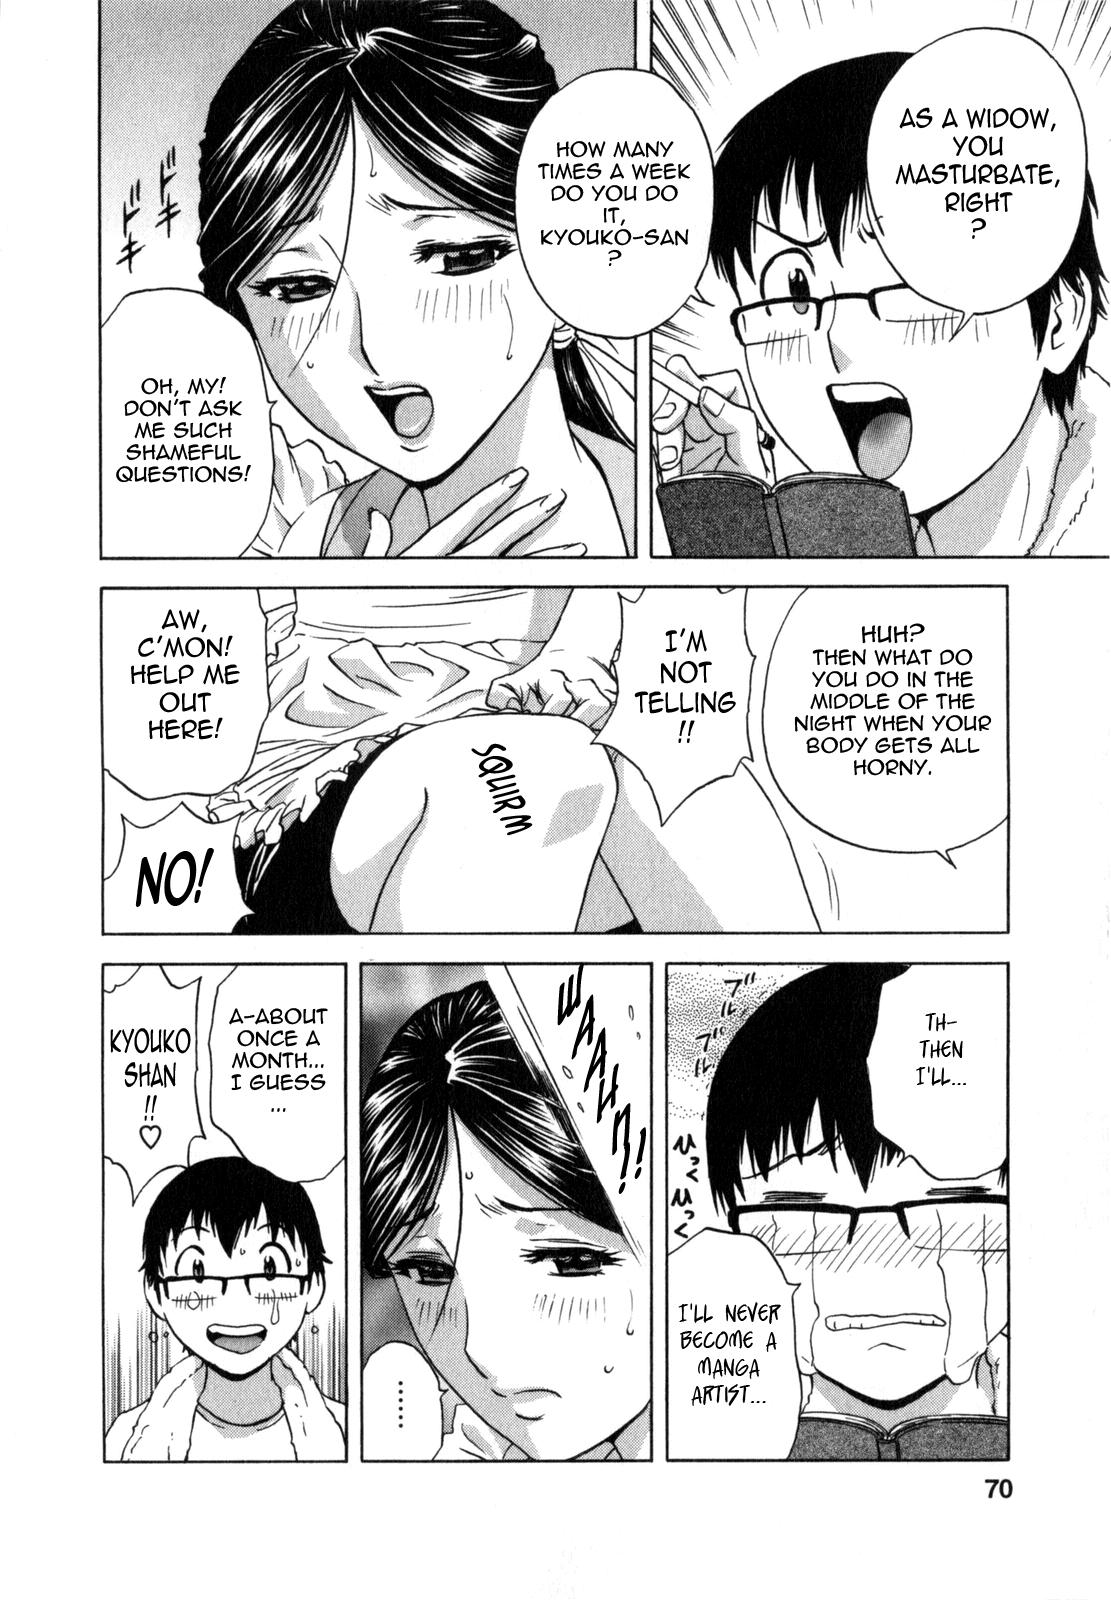 [Hidemaru] Life with Married Women Just Like a Manga 1 - Ch. 1-9 [English] {Tadanohito} 74